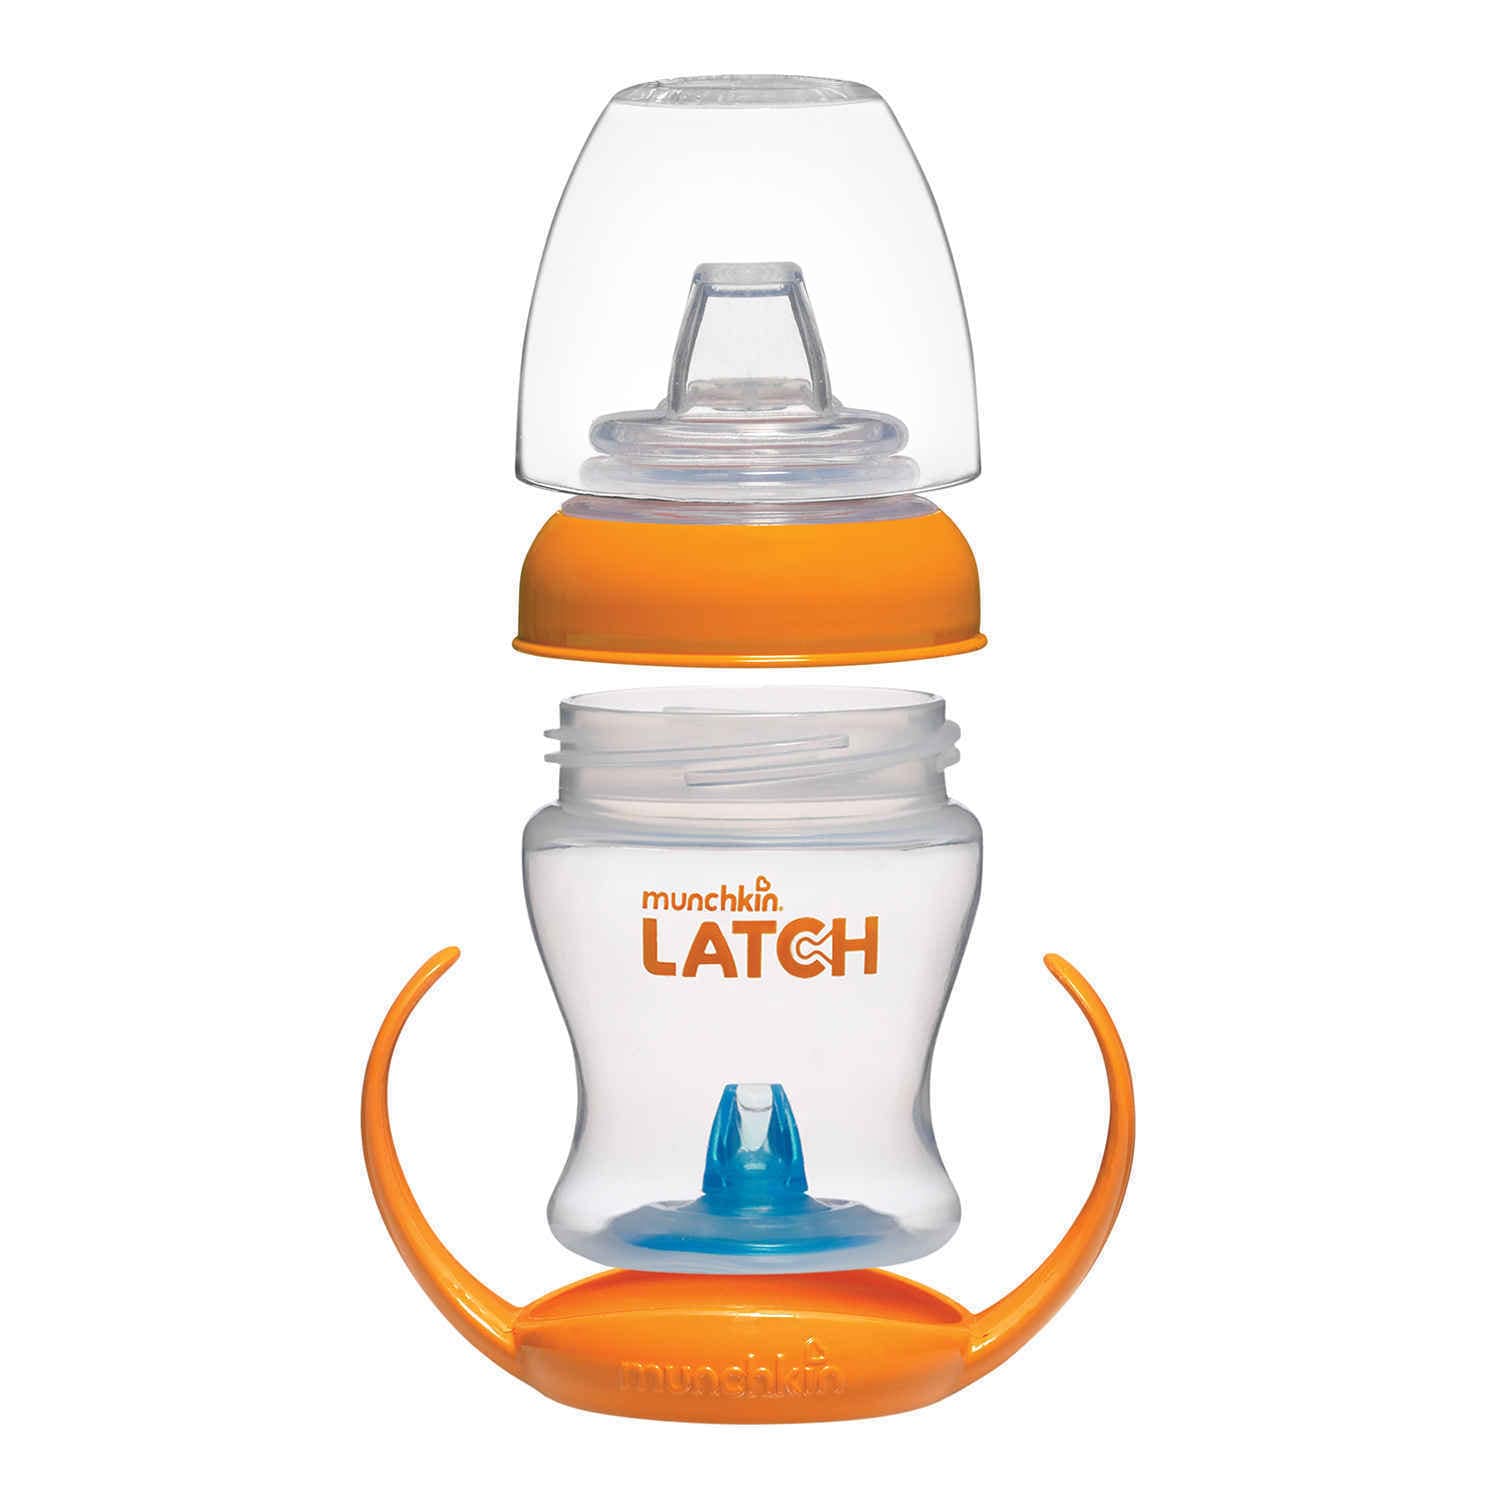 munchkin latch newborn bottle gift set